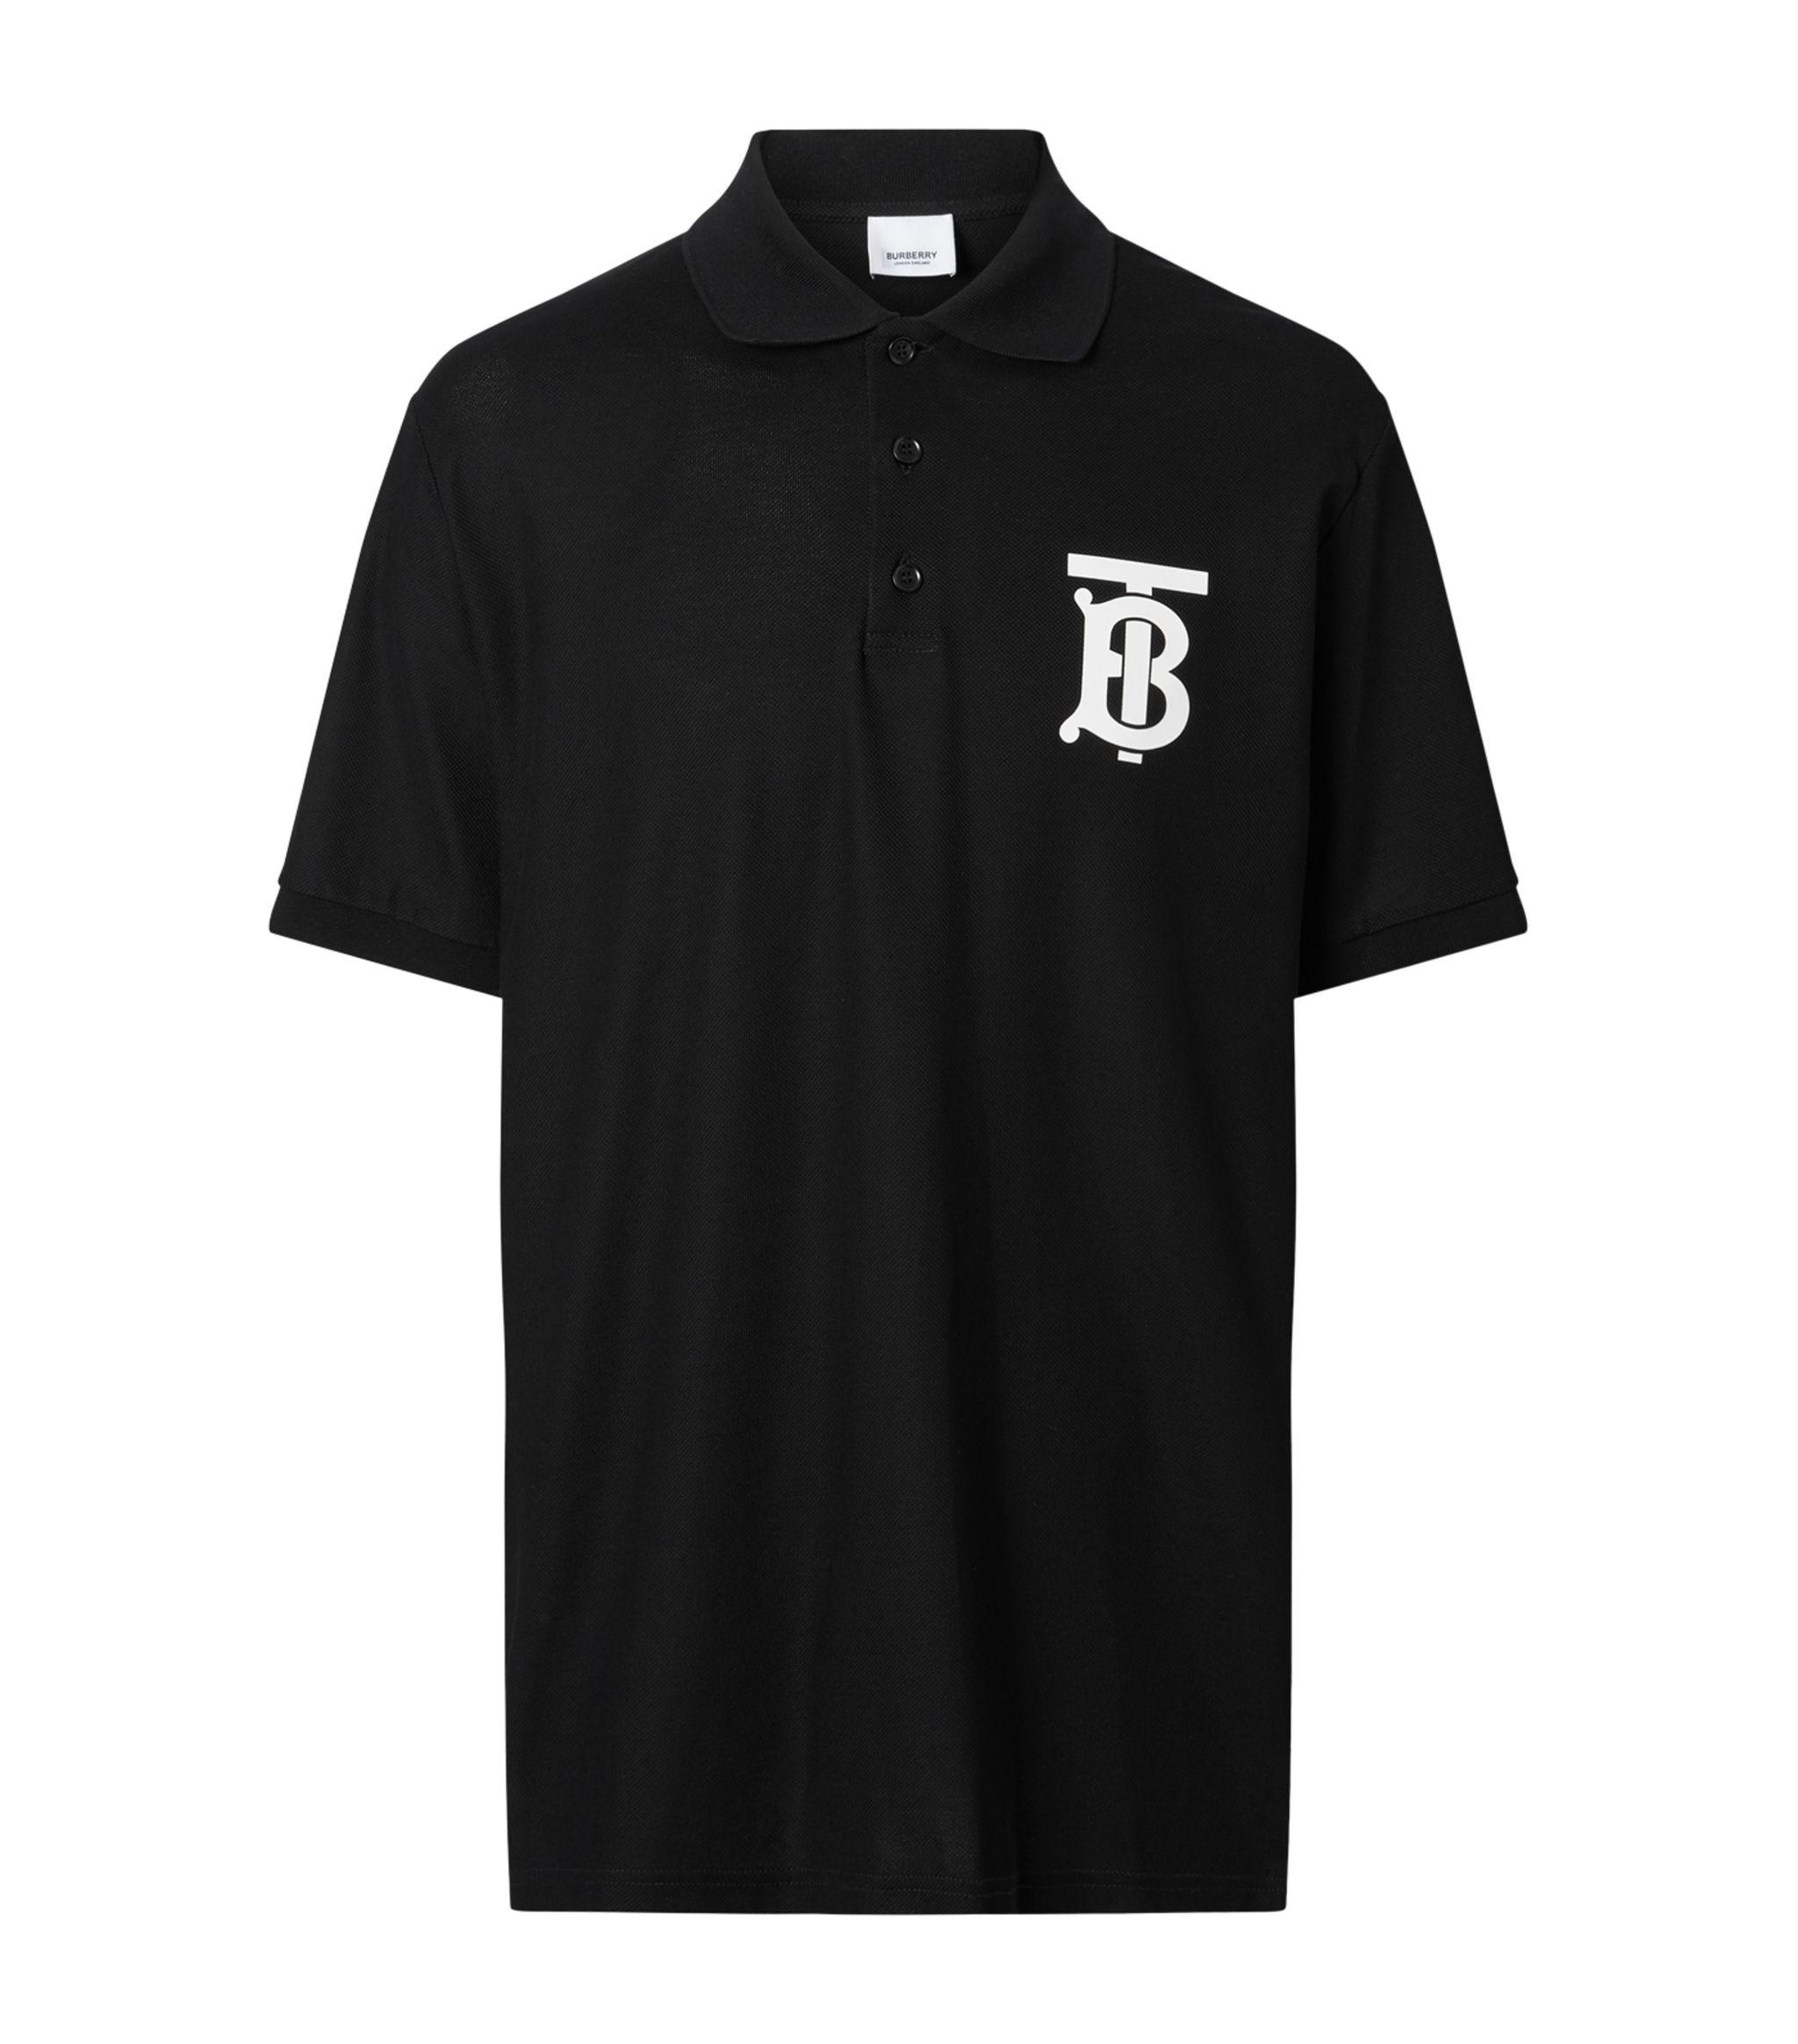 Burberry Cotton Tb Monogram Polo Shirt in Black for Men - Lyst